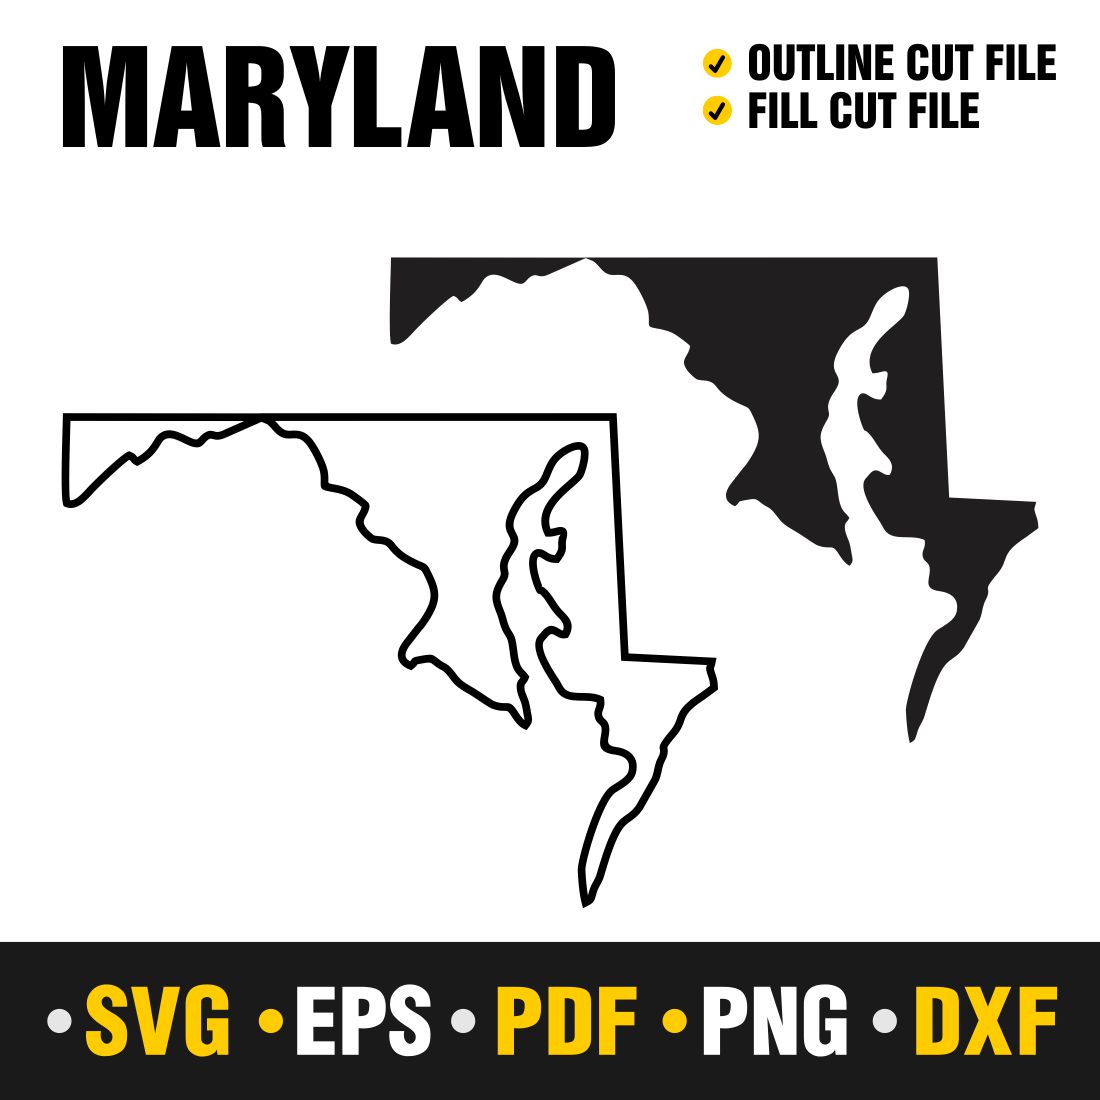 Maryland SVG, PNG, PDF, EPS & DXF cover image.